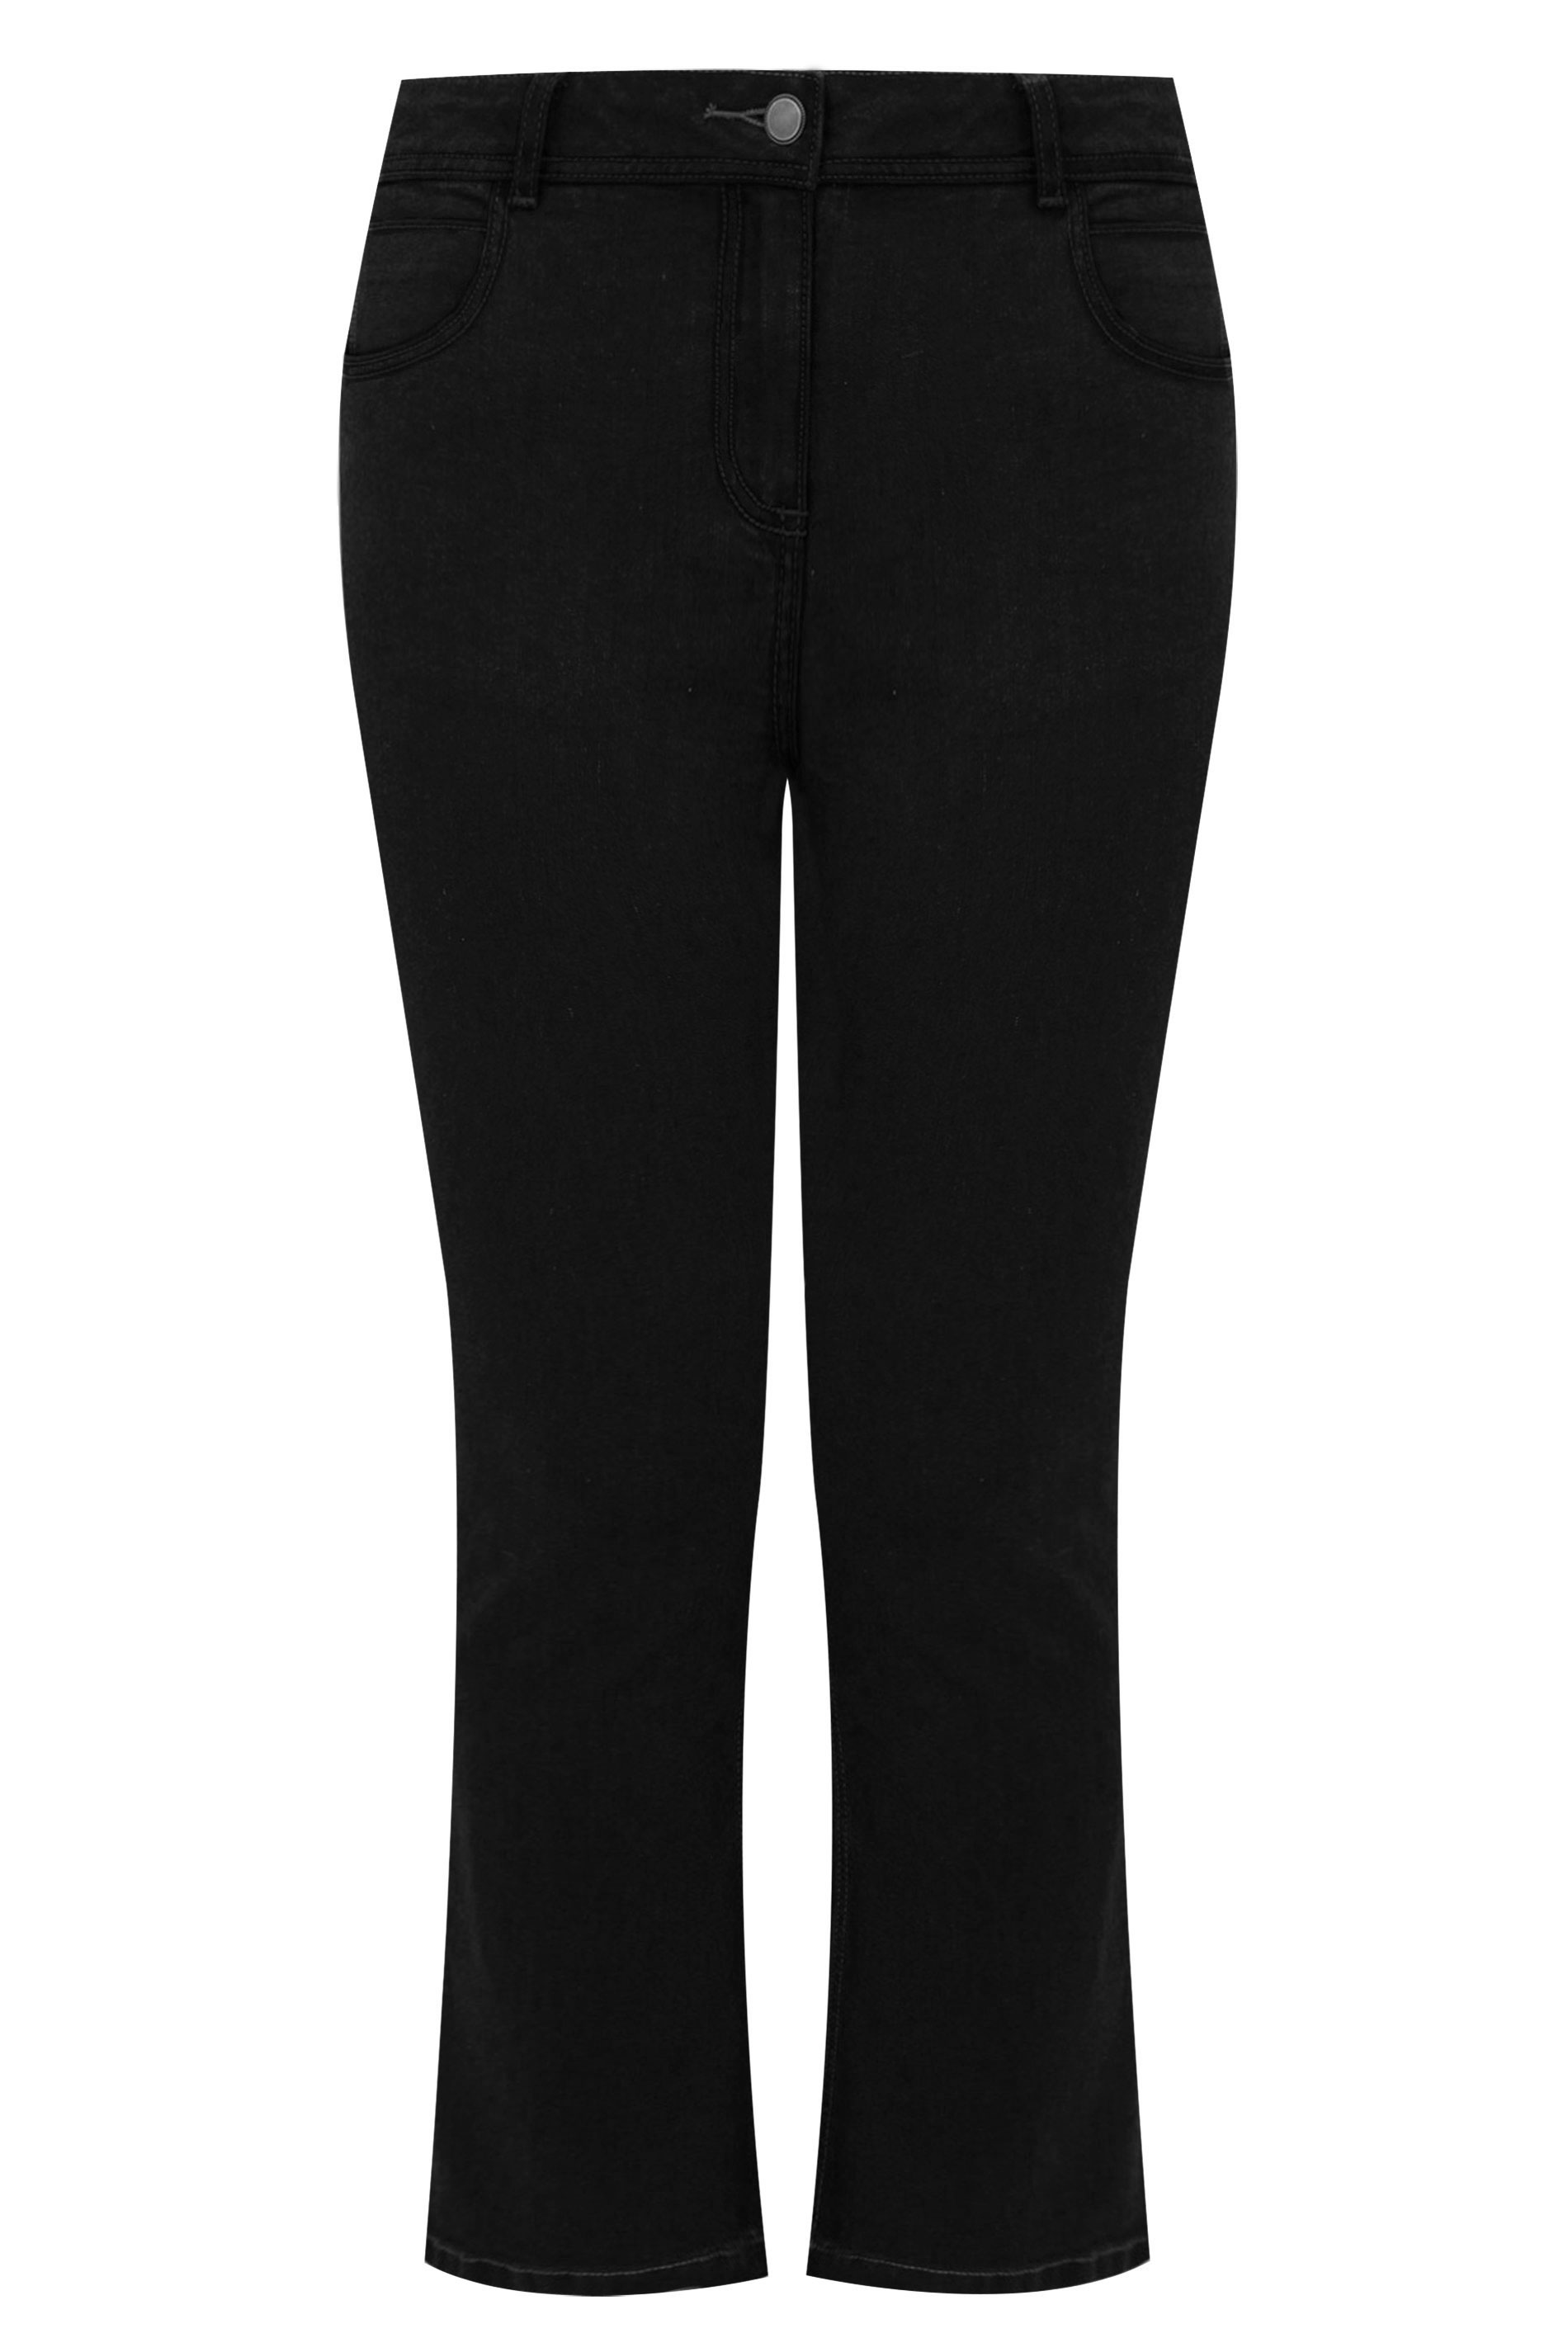 Plus Size Black Bootcut Fit ISLA Stretch Jeans